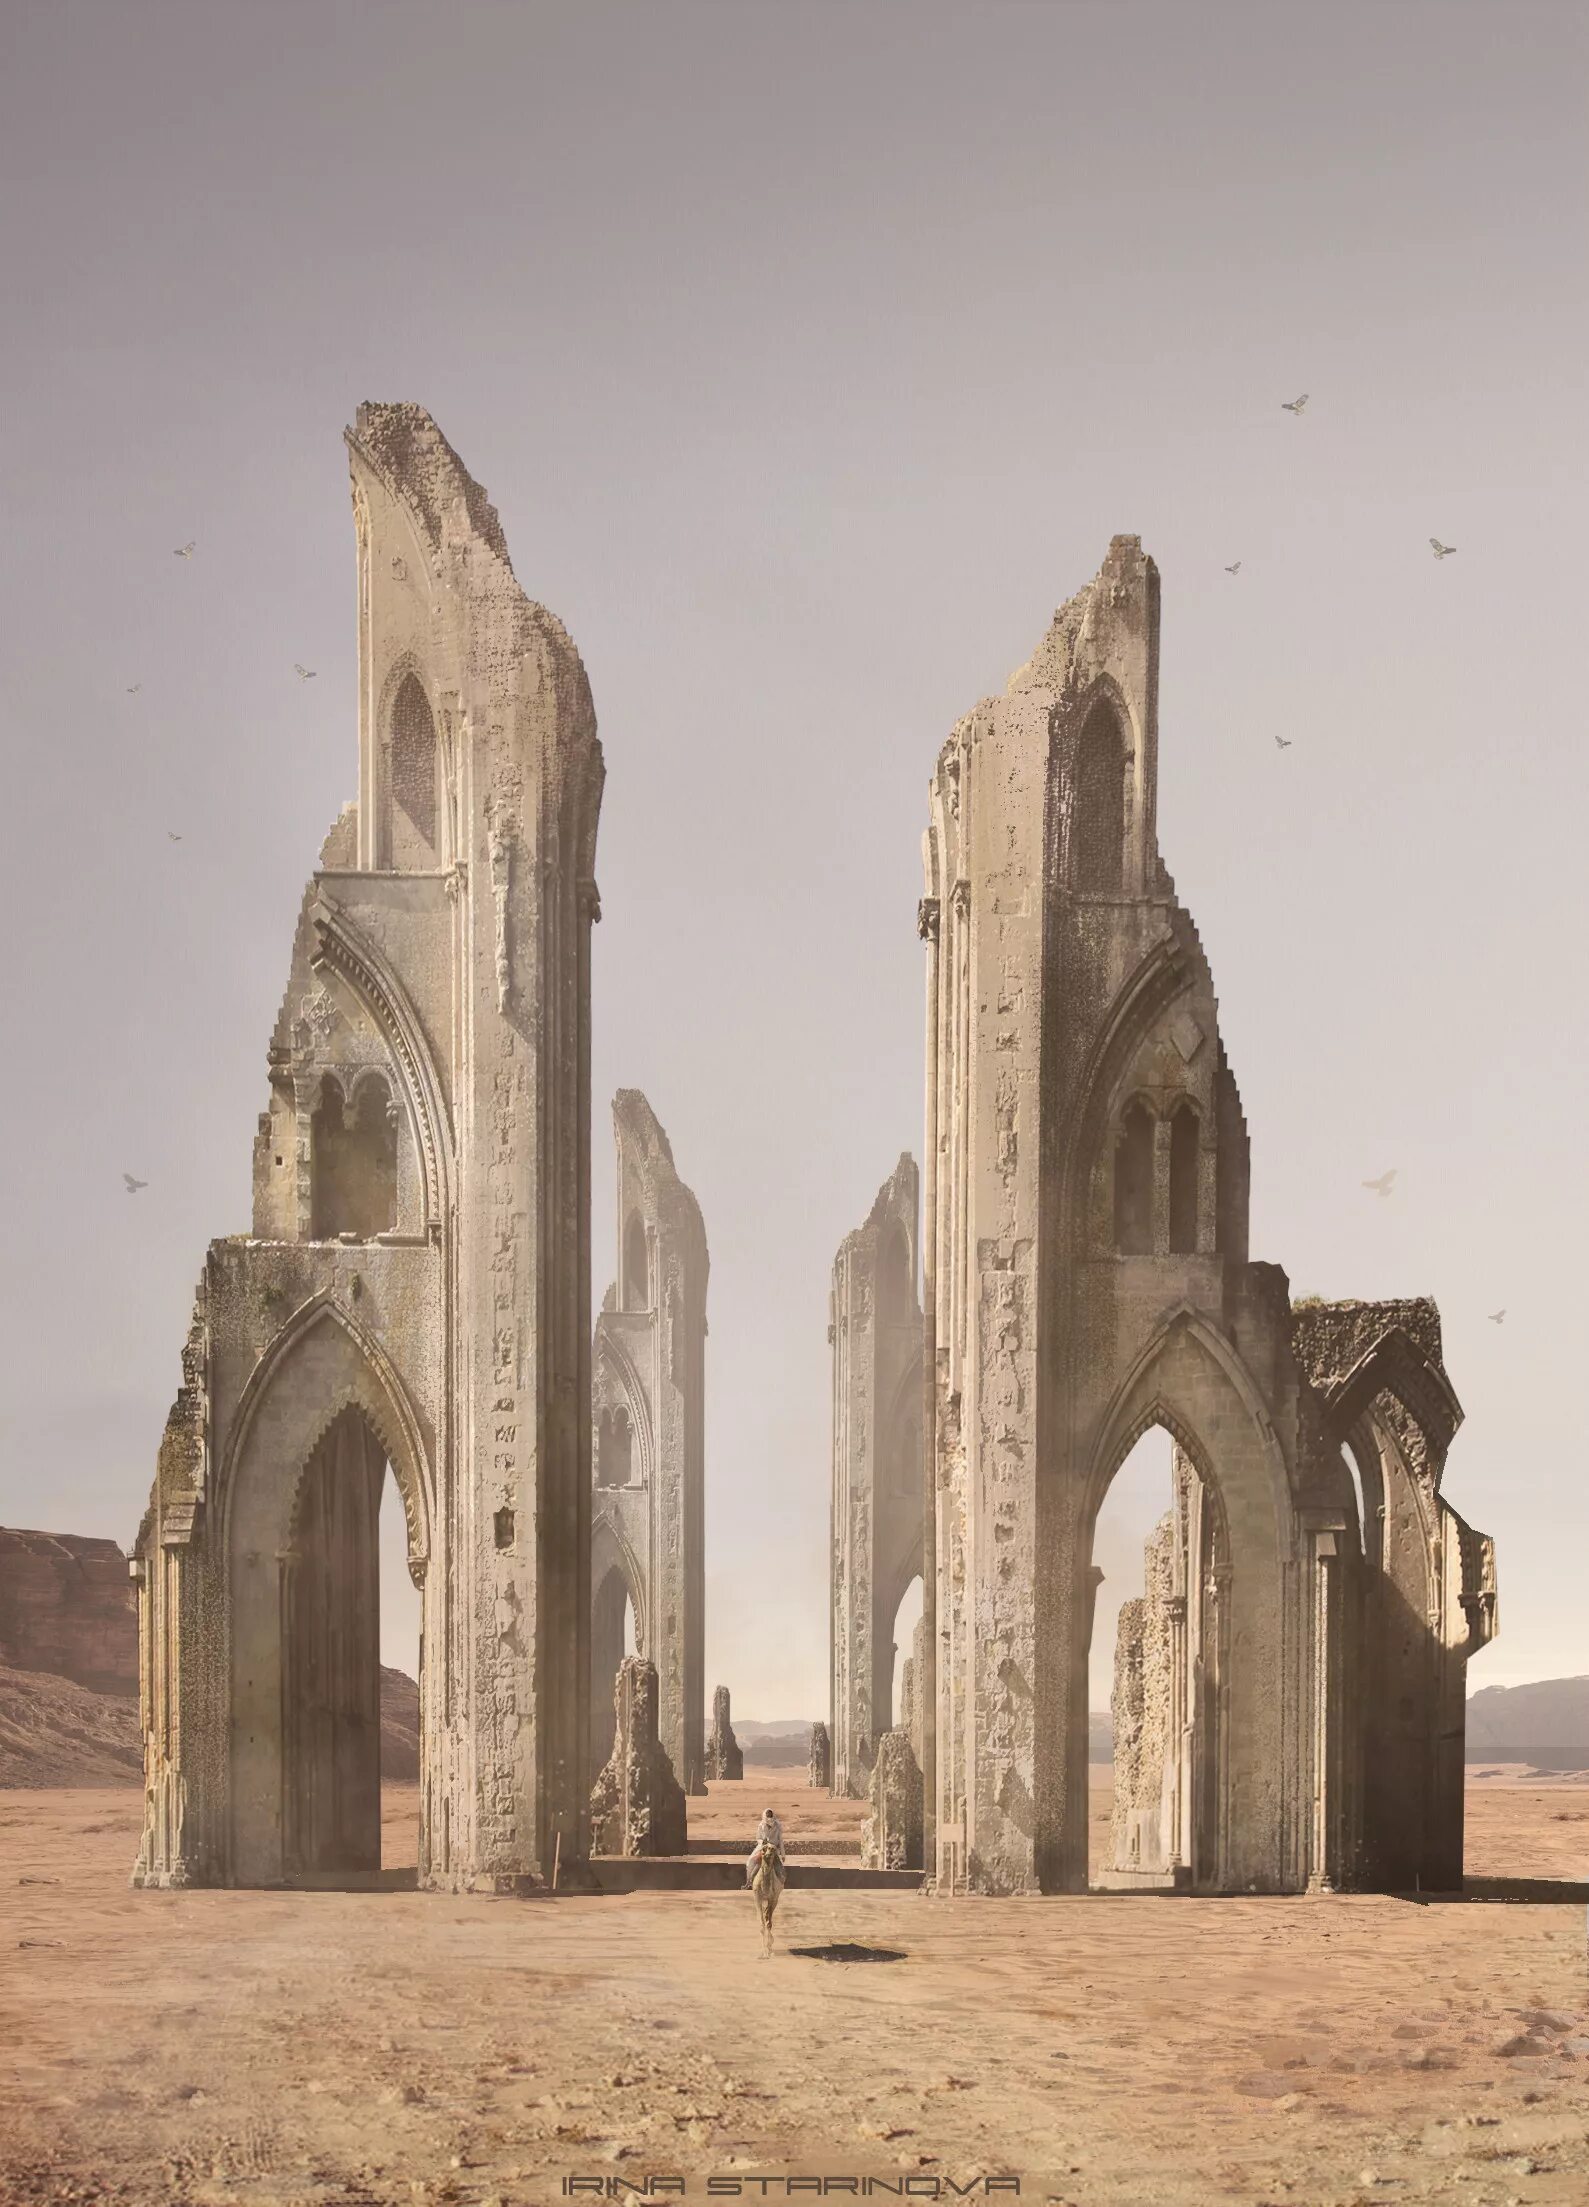 Yung desert temples. Руины в пустыне. Пустынный храм. Город в пустыне. Здание в пустыне.